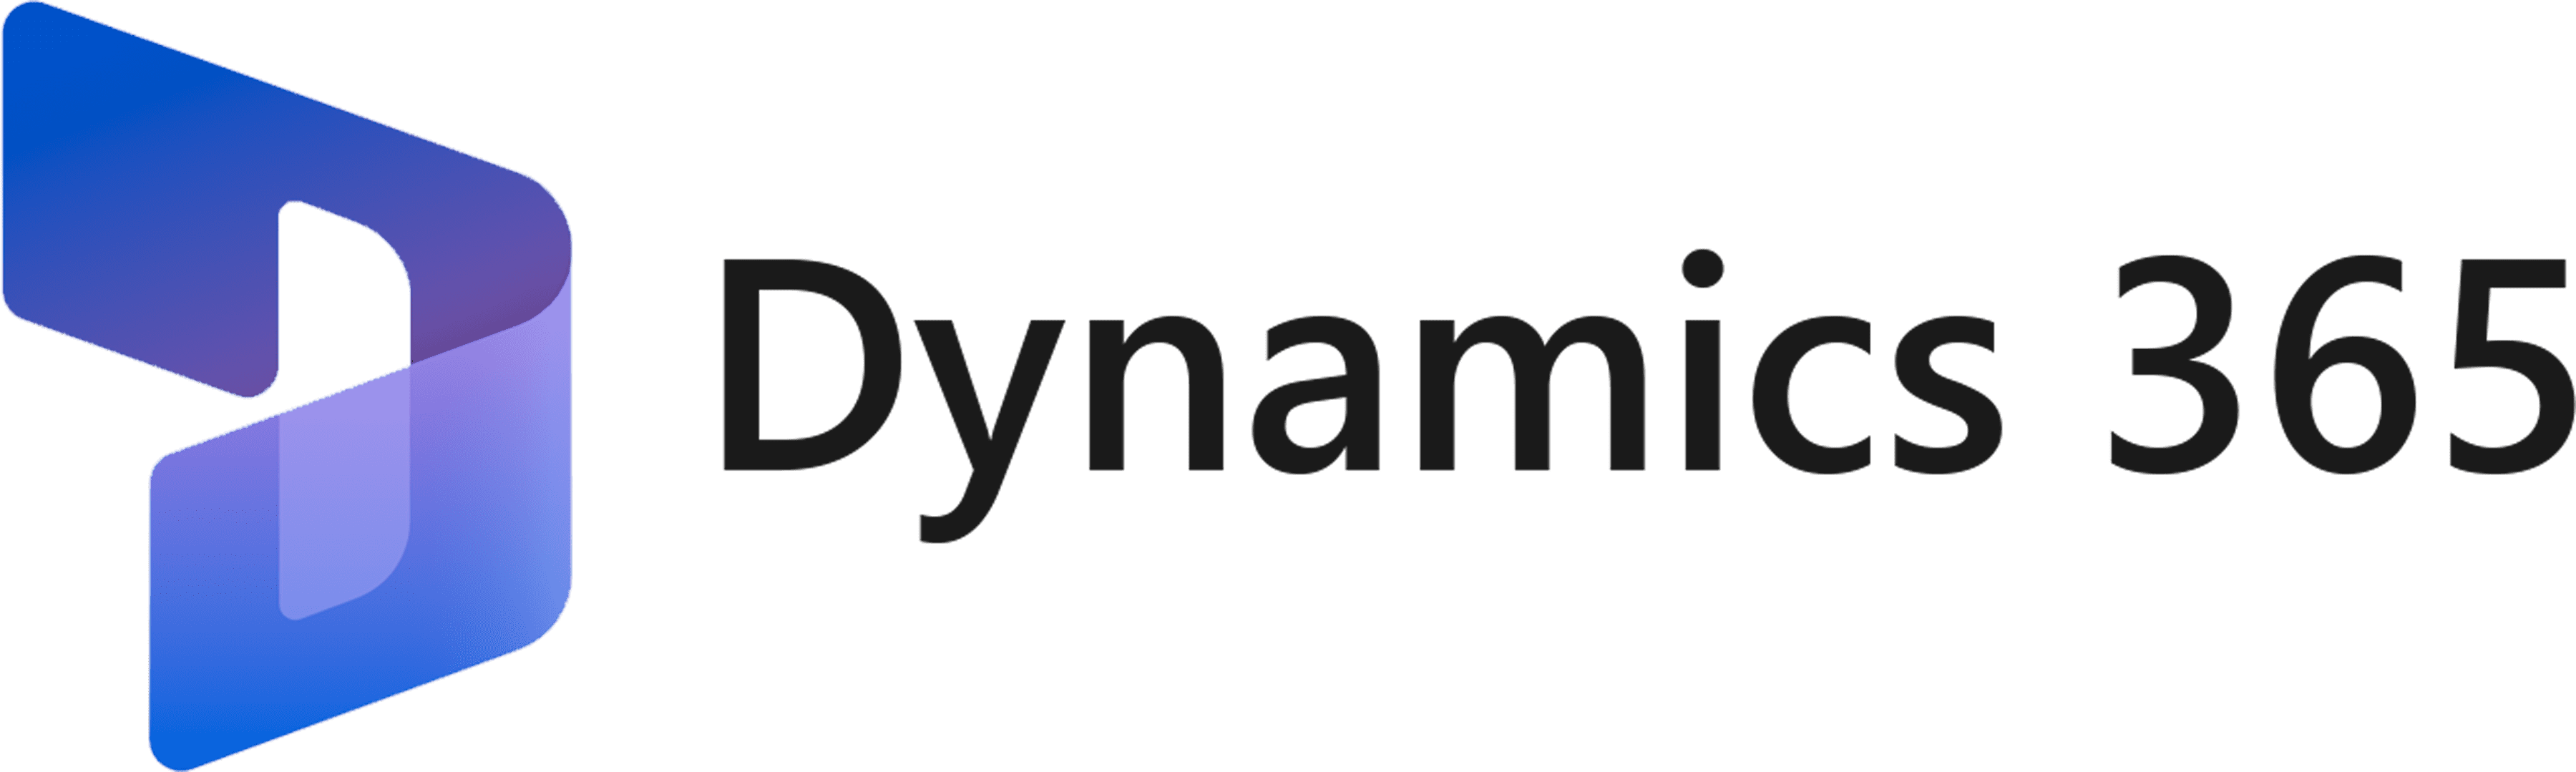 Image: MS Dynamics logo